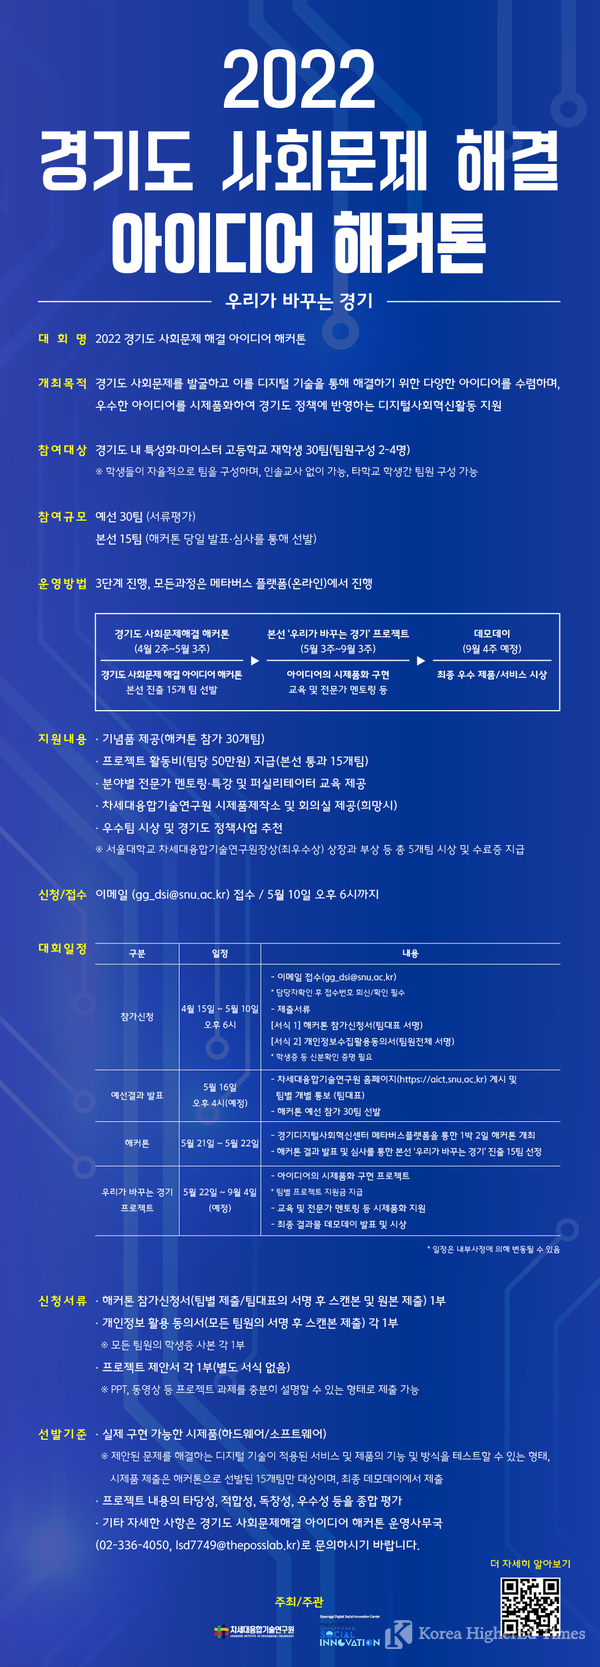 Gyeonggi-do social problem solving ideas hackathon recruitment poster